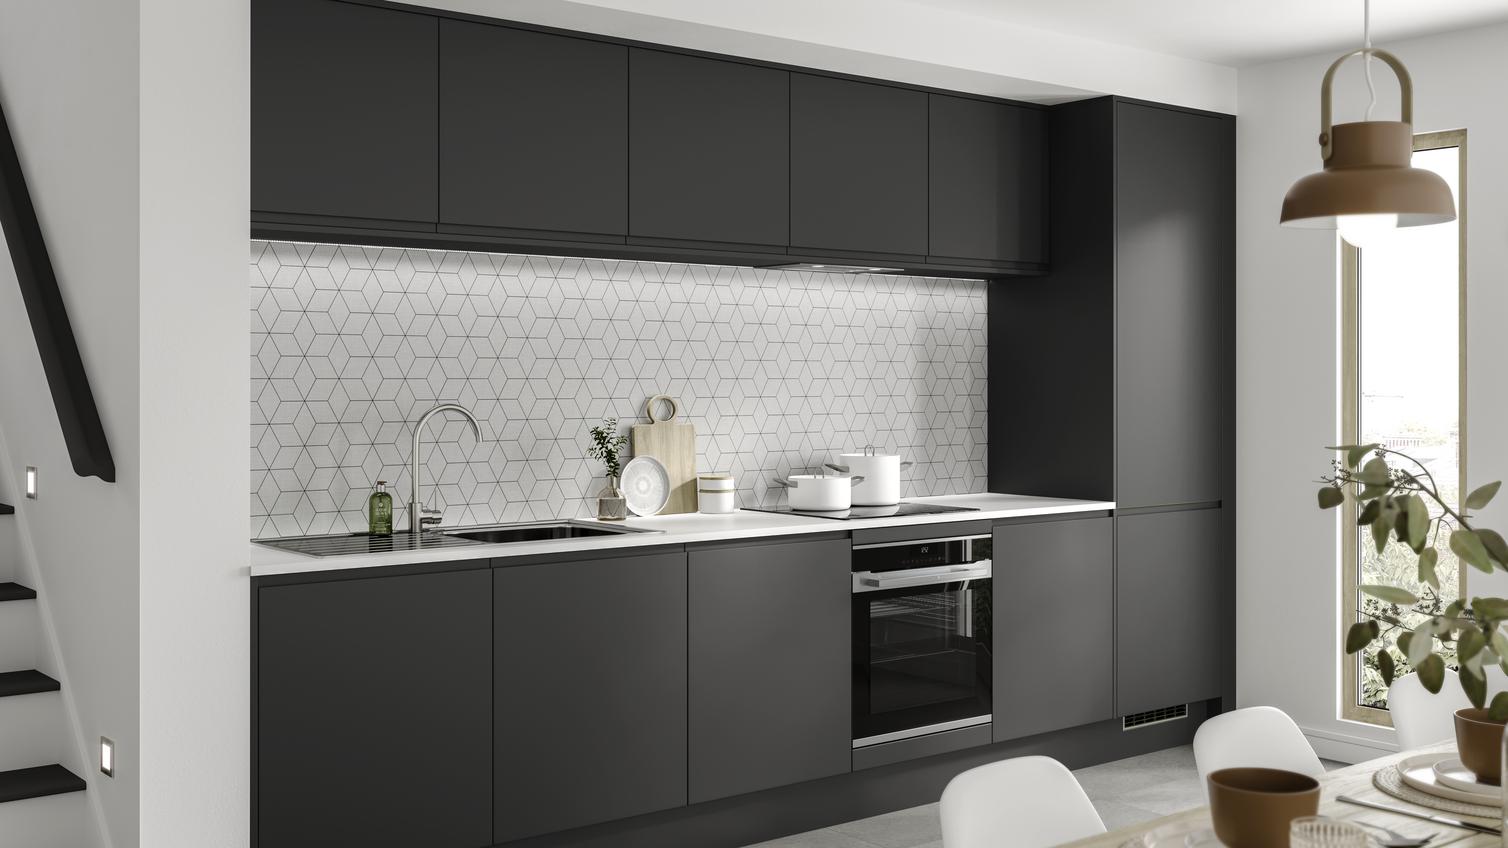 Ultra-modern black kitchen idea in a single wall layout. Has matt charcoal integrated handle units and a geometric backboard.